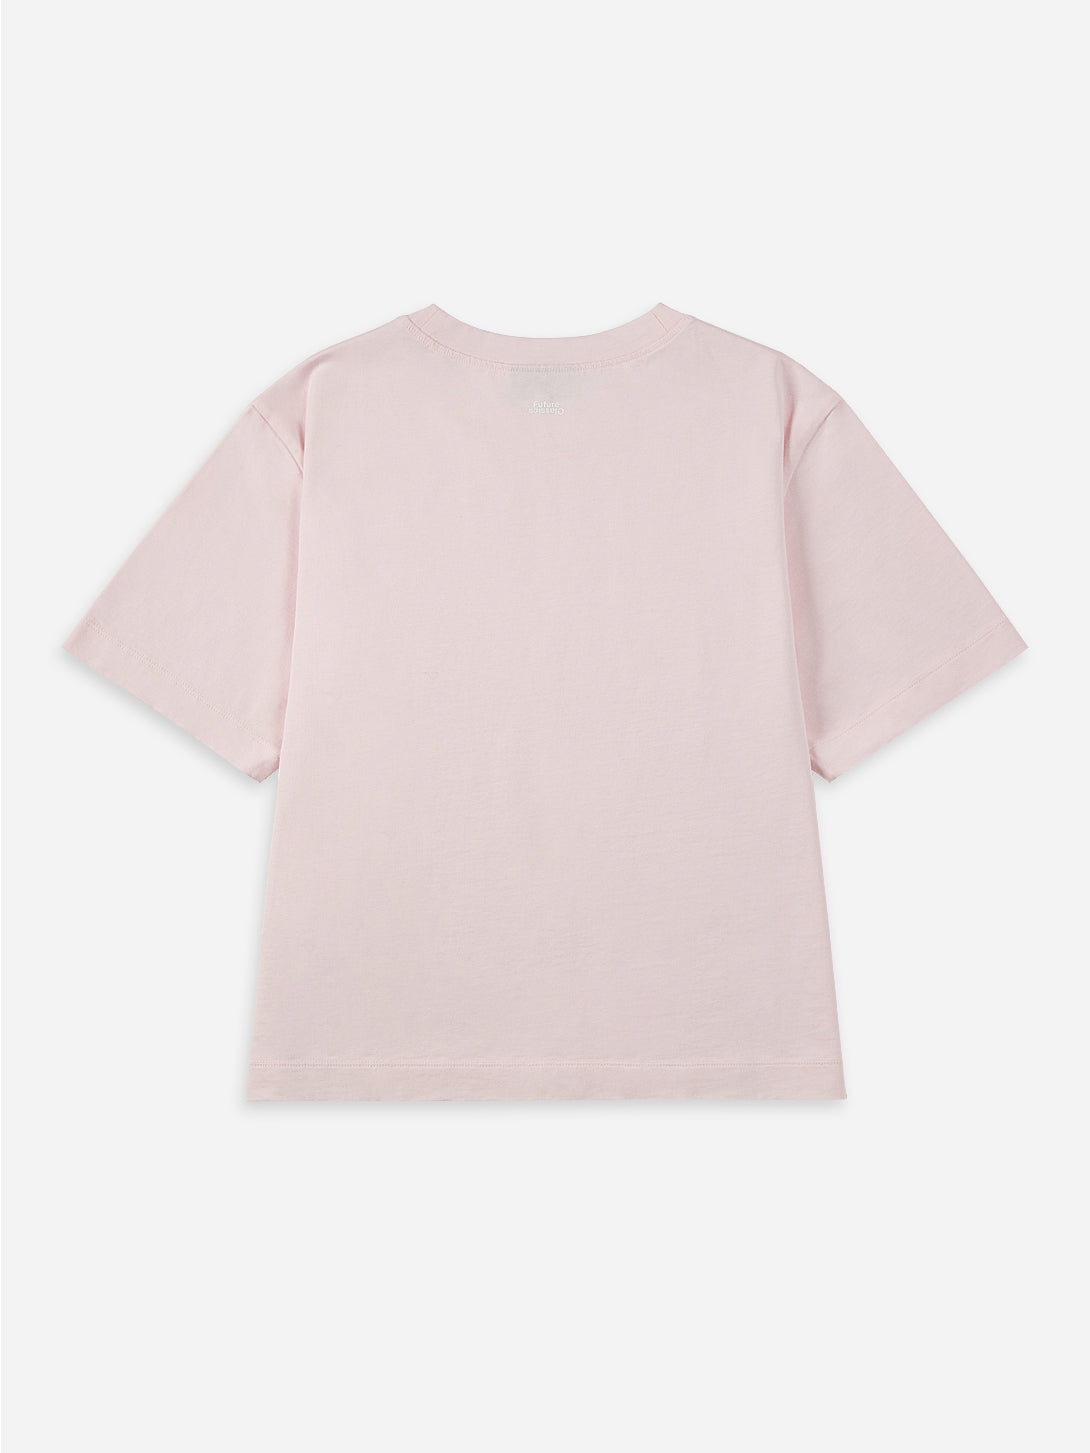 Blushing Pink Nova Boxy Tee Relaxed Fit Shirt